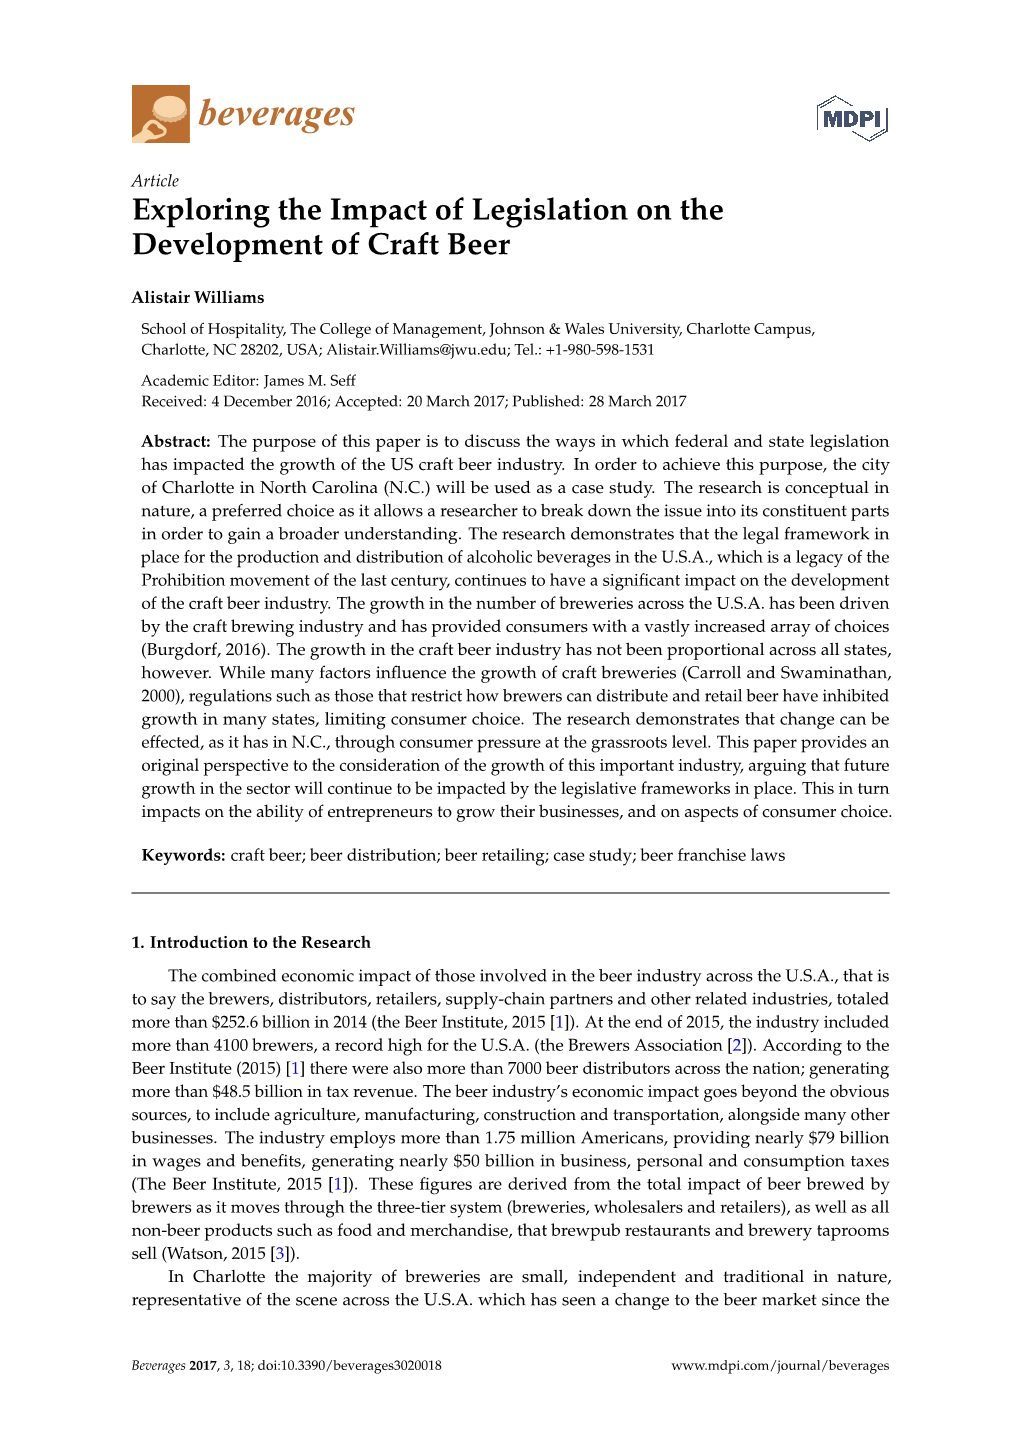 Exploring the Impact of Legislation on the Development of Craft Beer